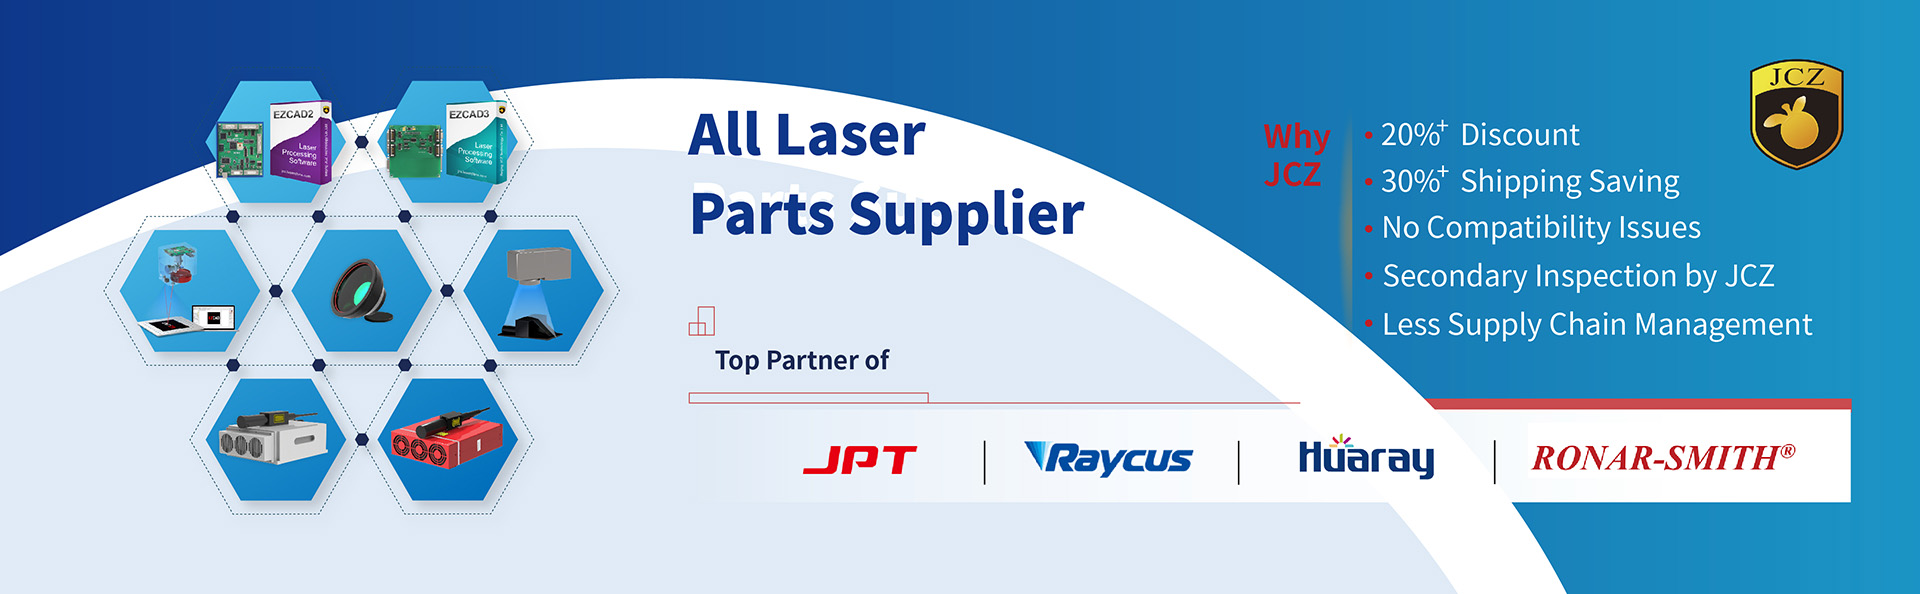 All Laser Parts Supplier chineselaser BANNER-3